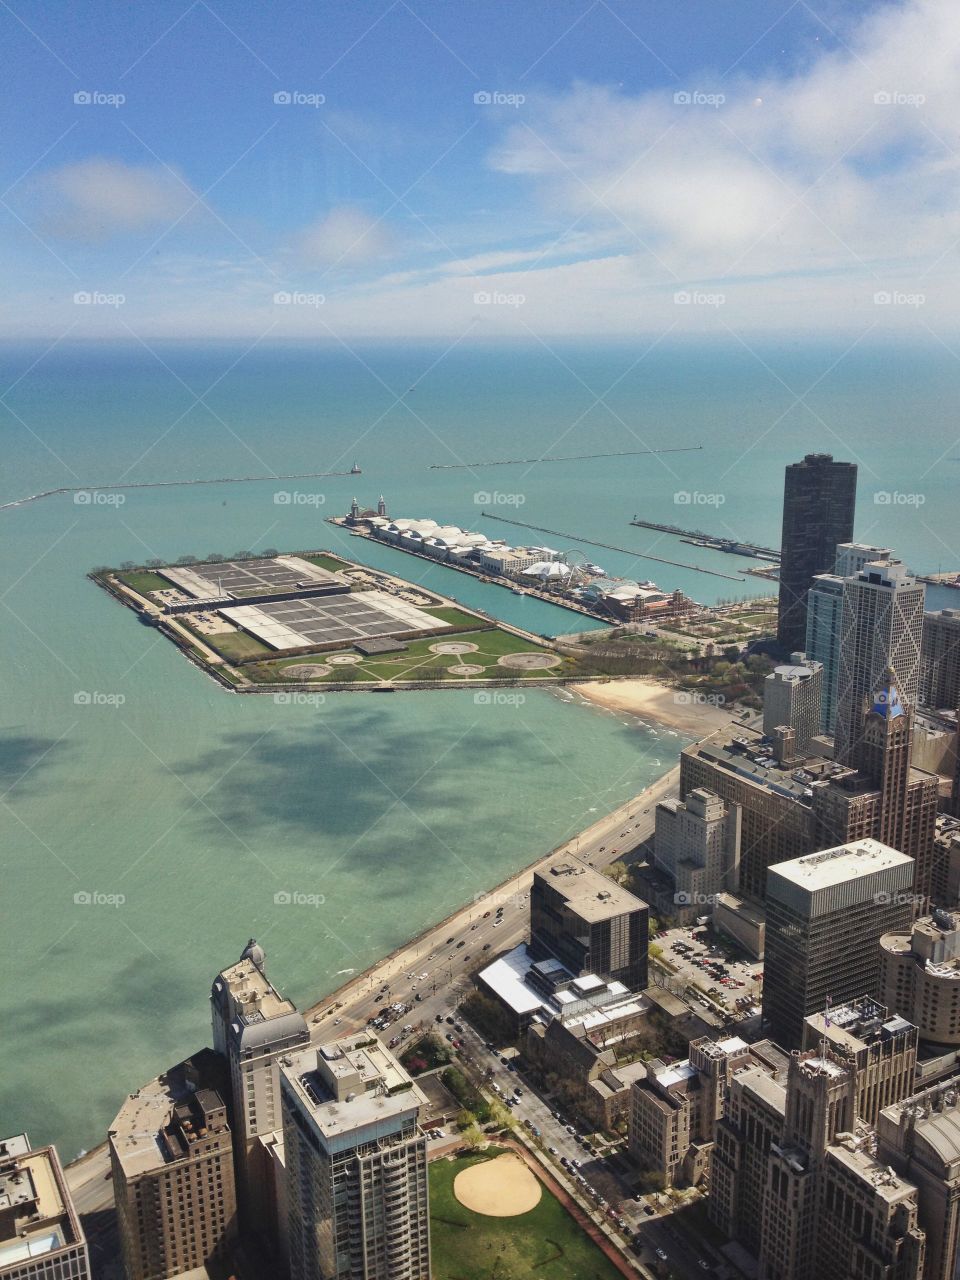 Chicago Skyline. Bird's eye view of Navy Pier and Chicago's Architecture. 